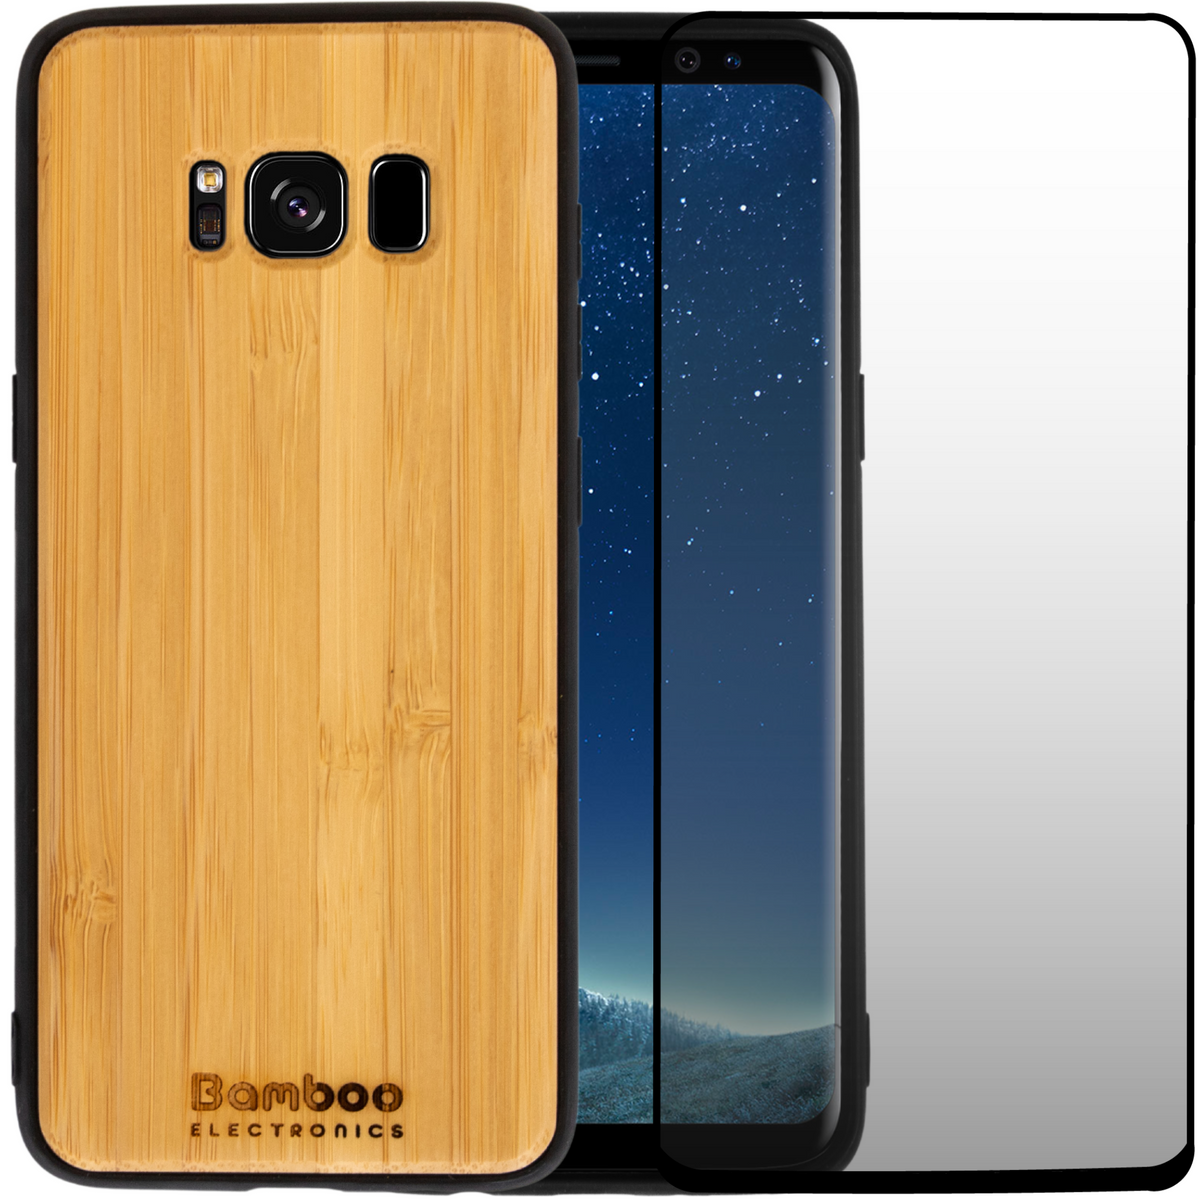 Samsung GS8 Wooden Case + Screen Protector